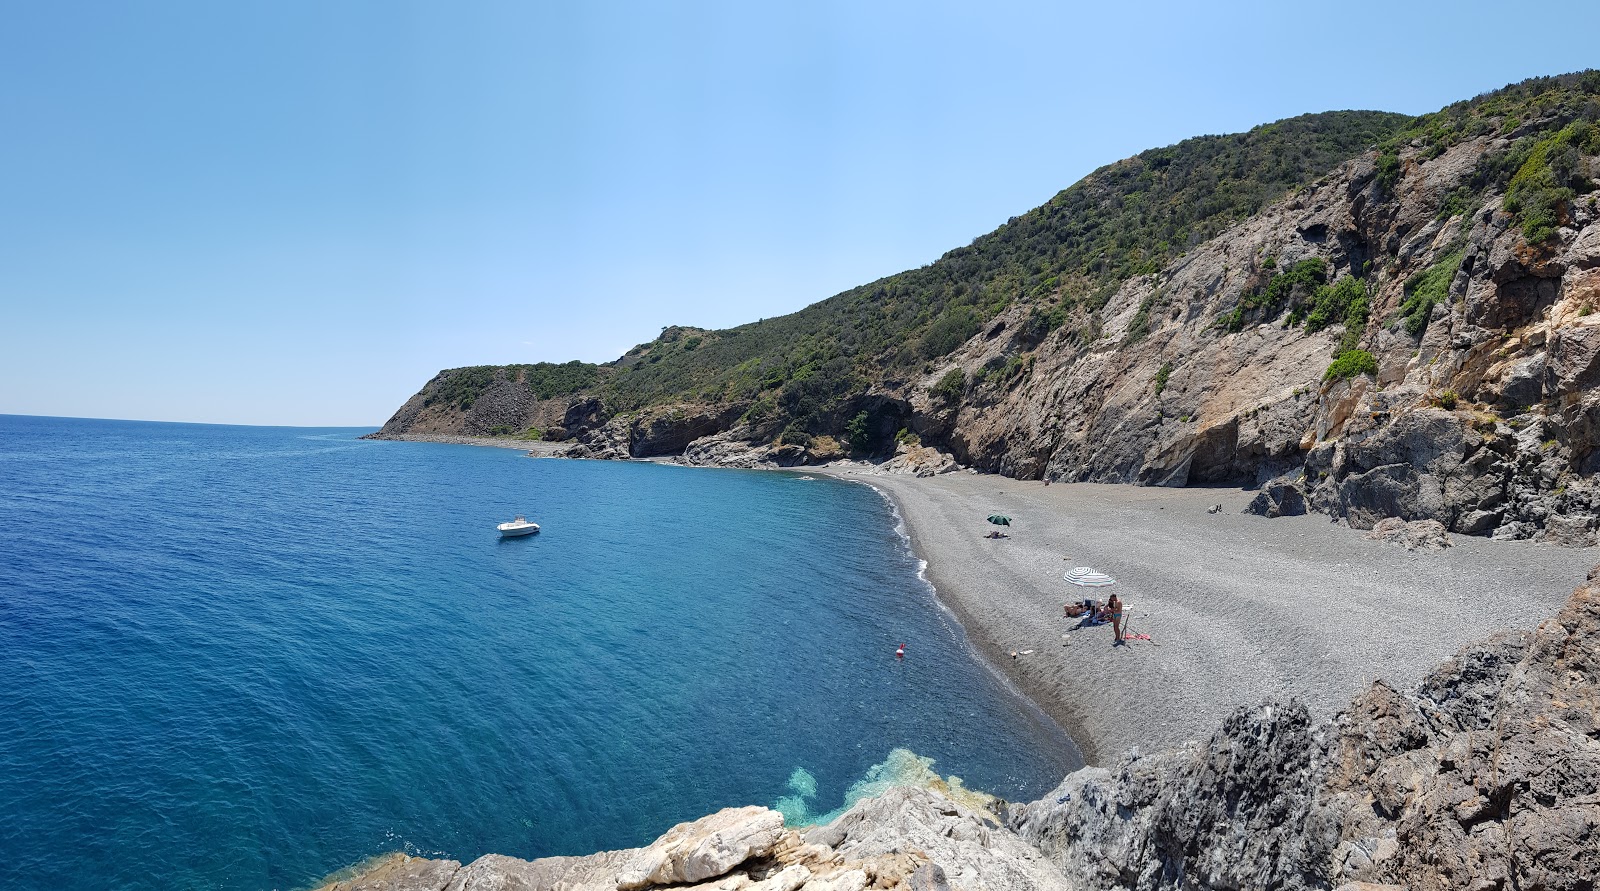 Photo de Spiaggia del Ginepro avec caillou fin gris de surface